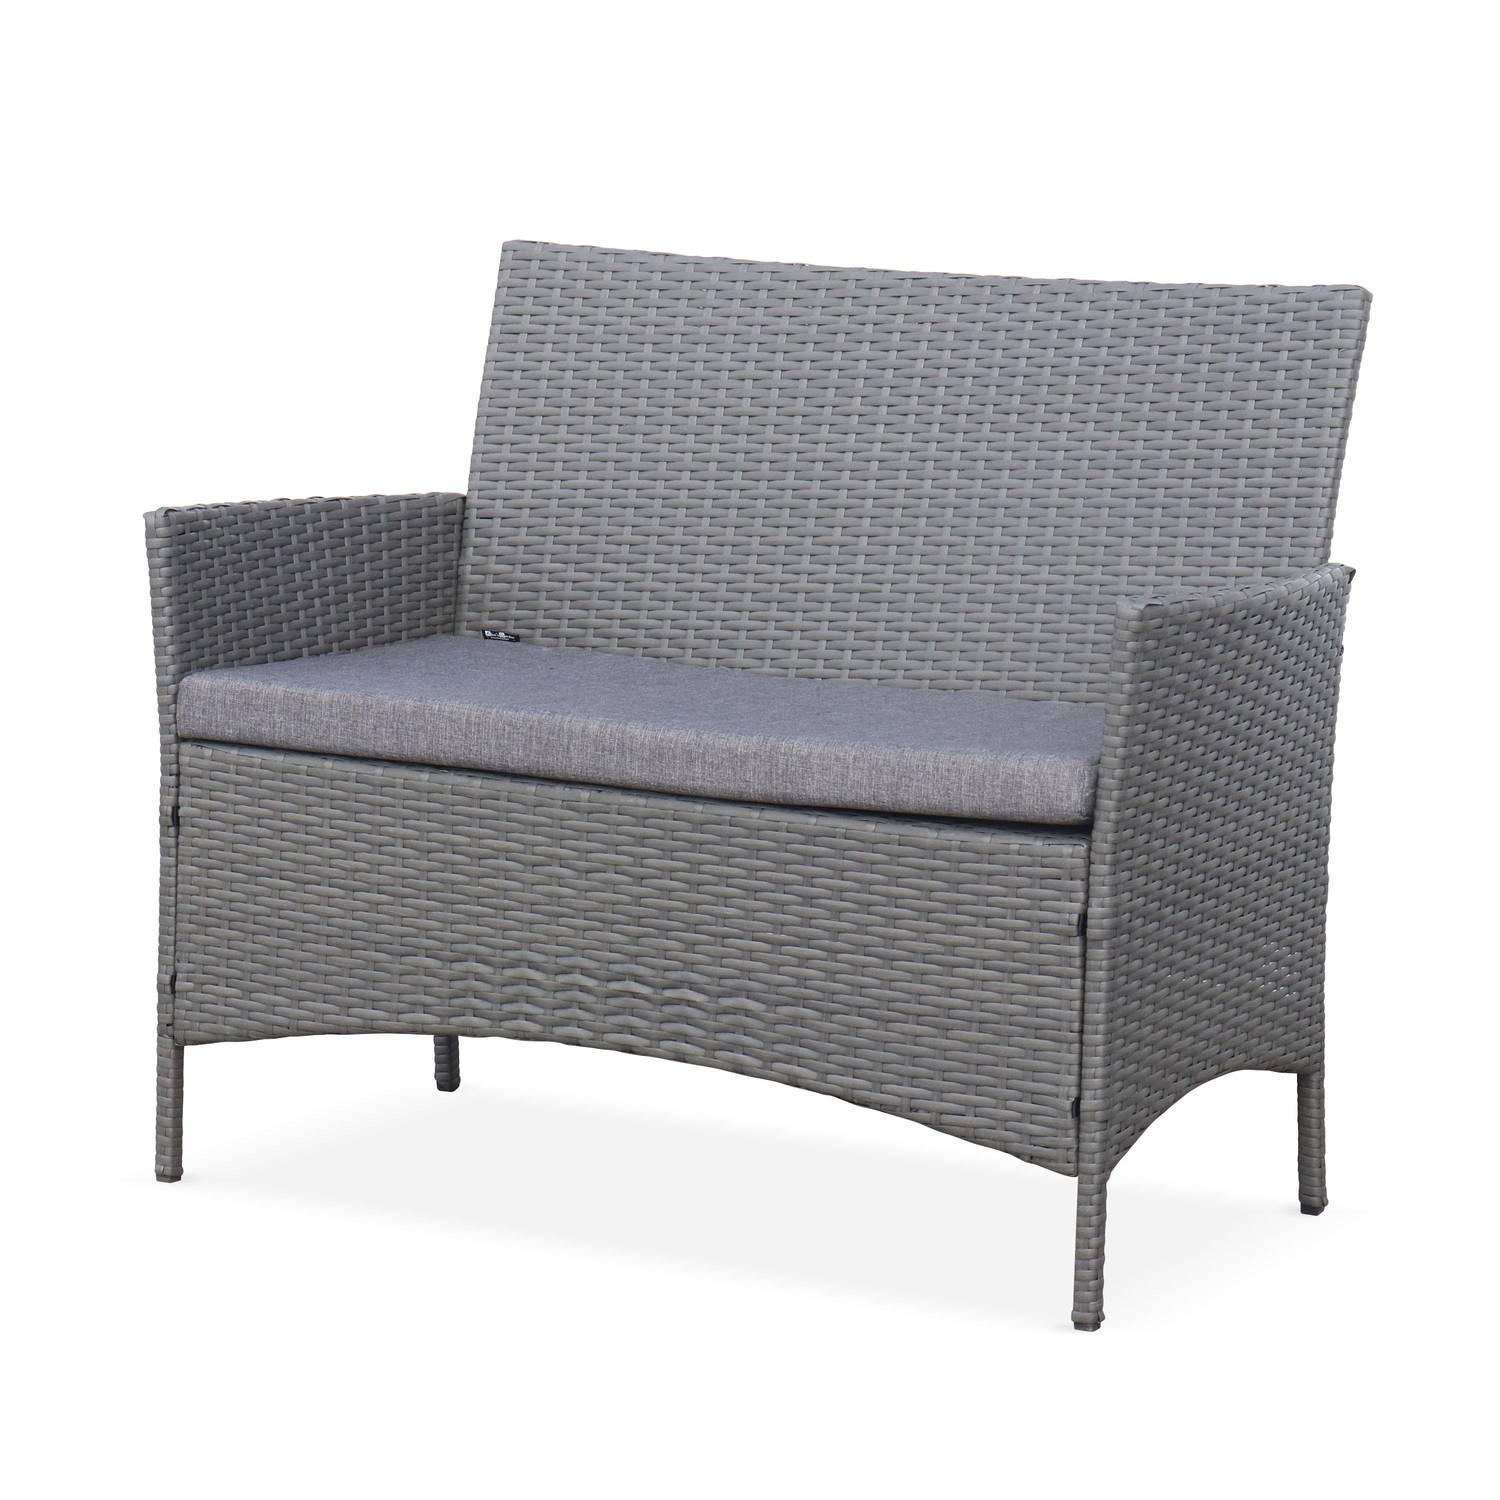 4-seater polyrattan garden sofa set - sofa, 2 armchairs, coffee table - Moltes - Grey rattan, Grey cushions Photo3